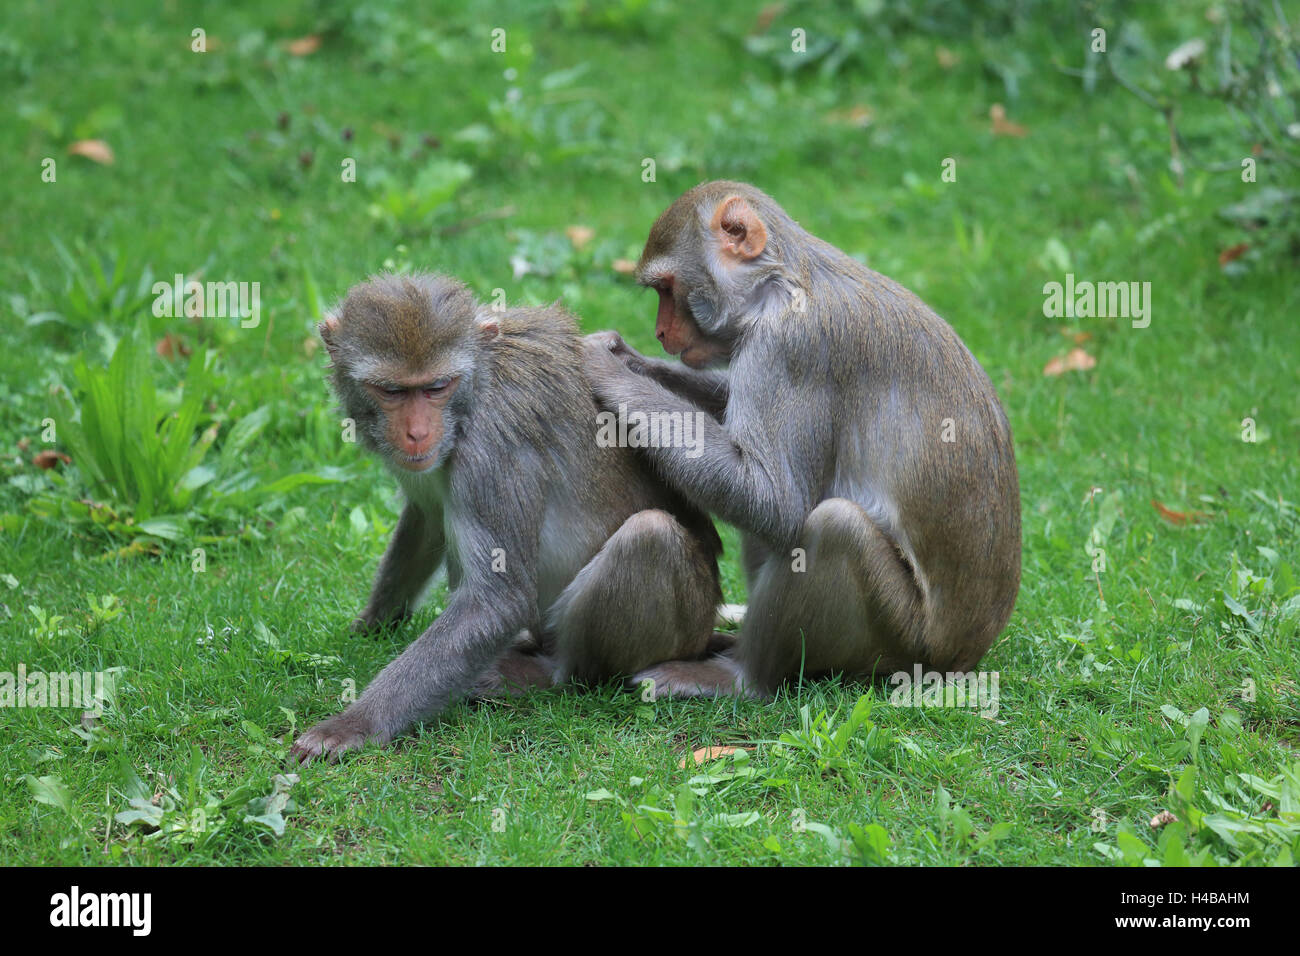 Rhesus macaques delousing, Macaca mulatta Stock Photo